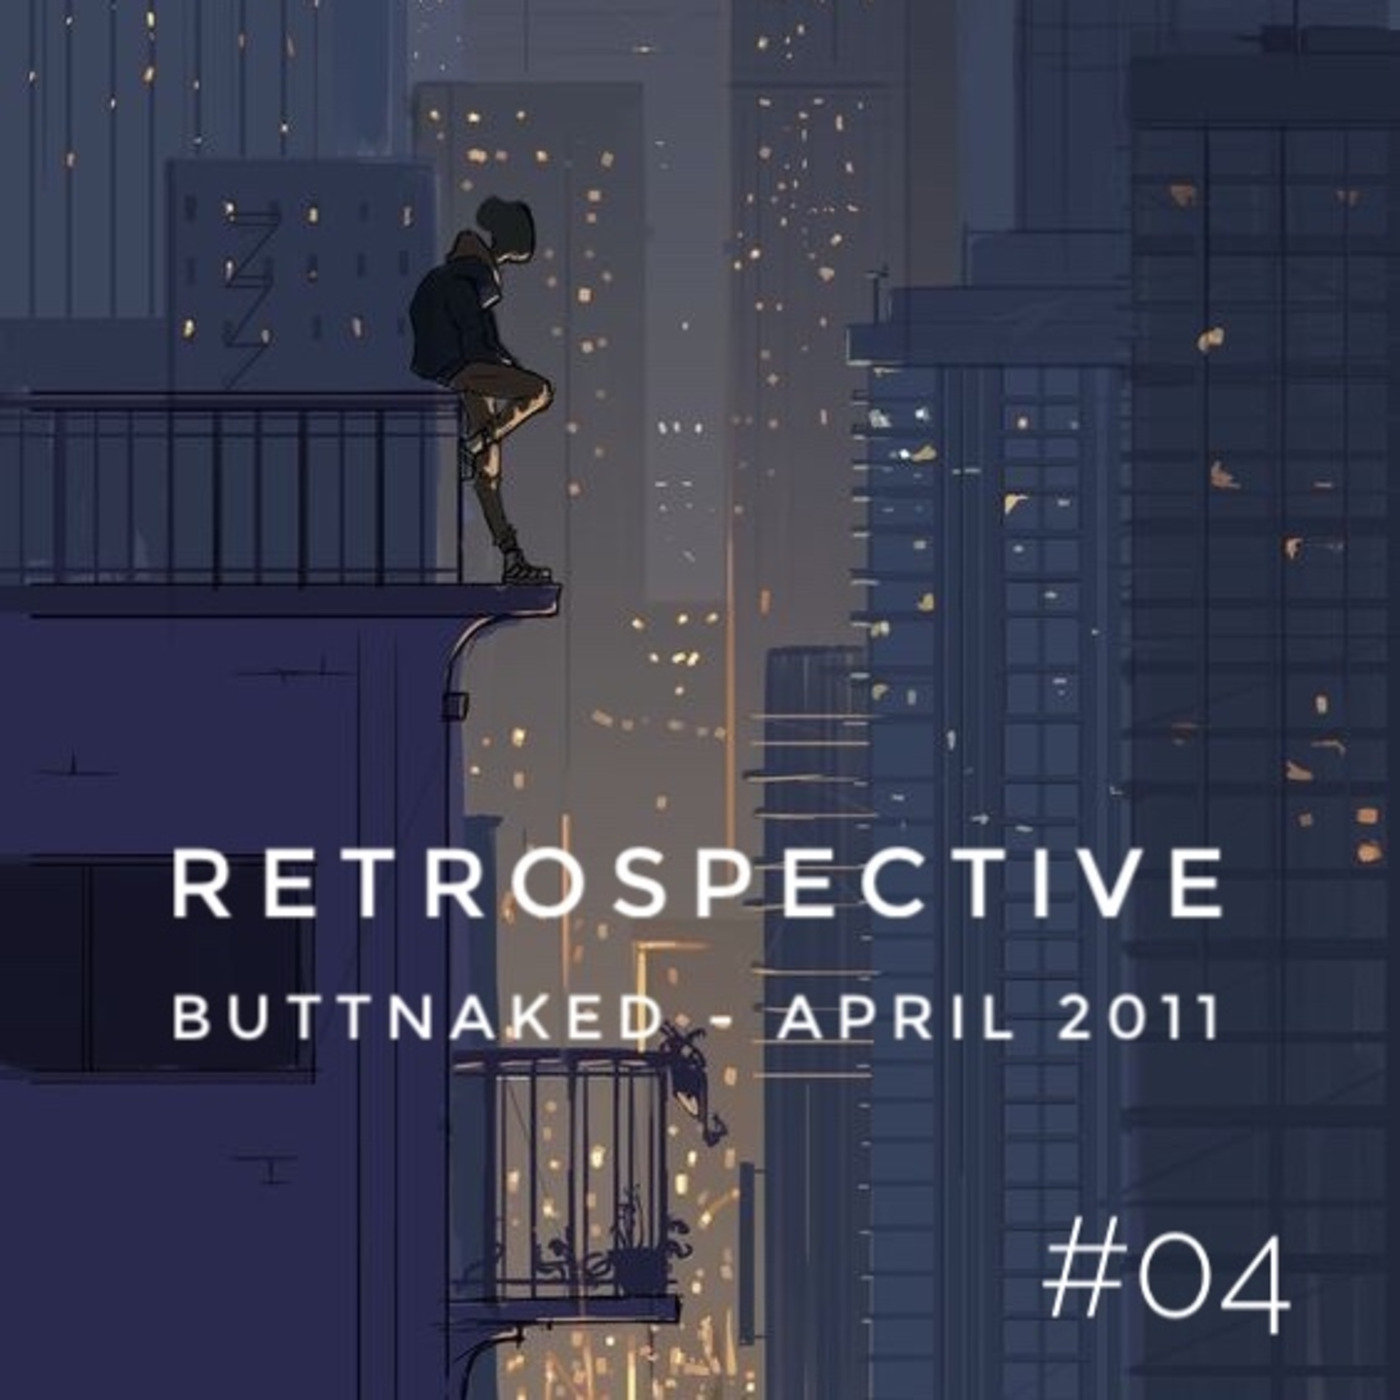 Iain Willis presents Retrospective #04 - Buttnaked Lost Mixes